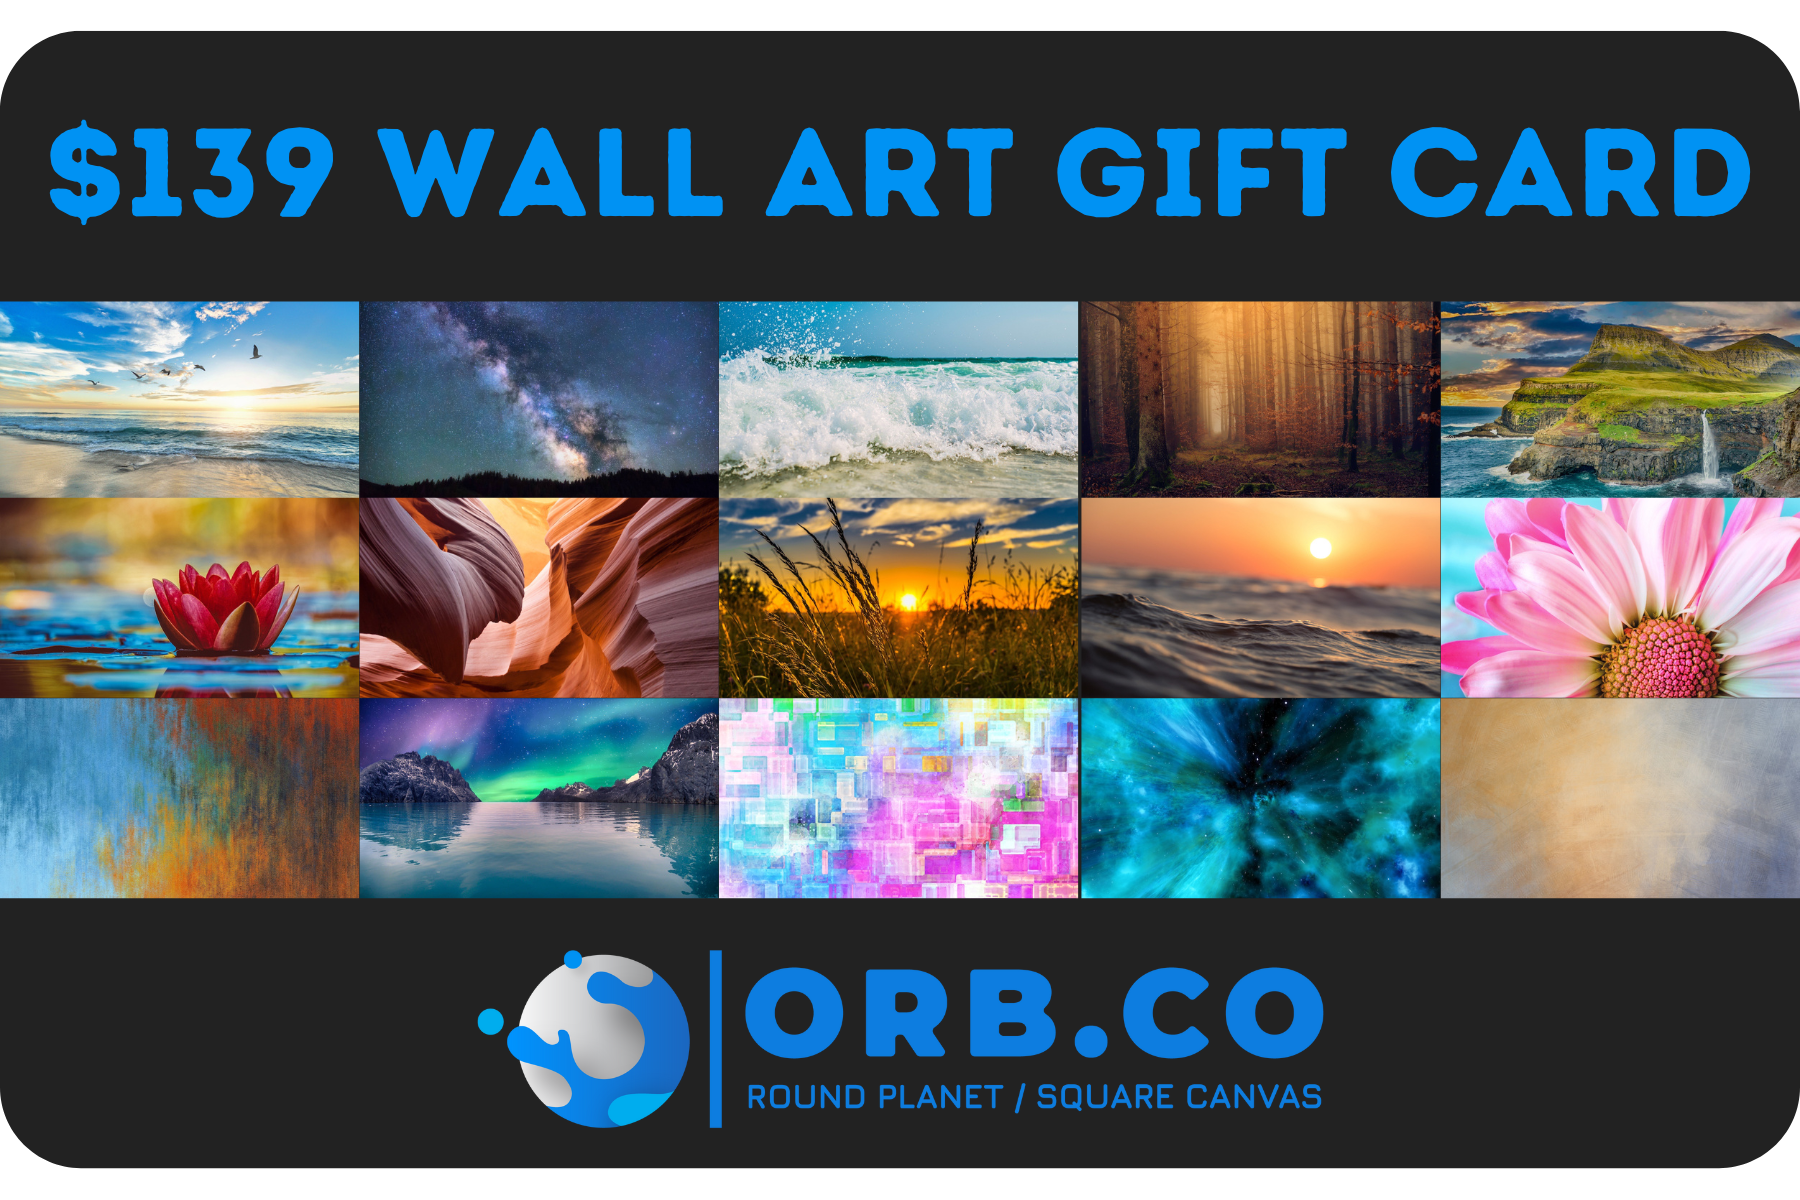 $139 Wall Art Gift Card